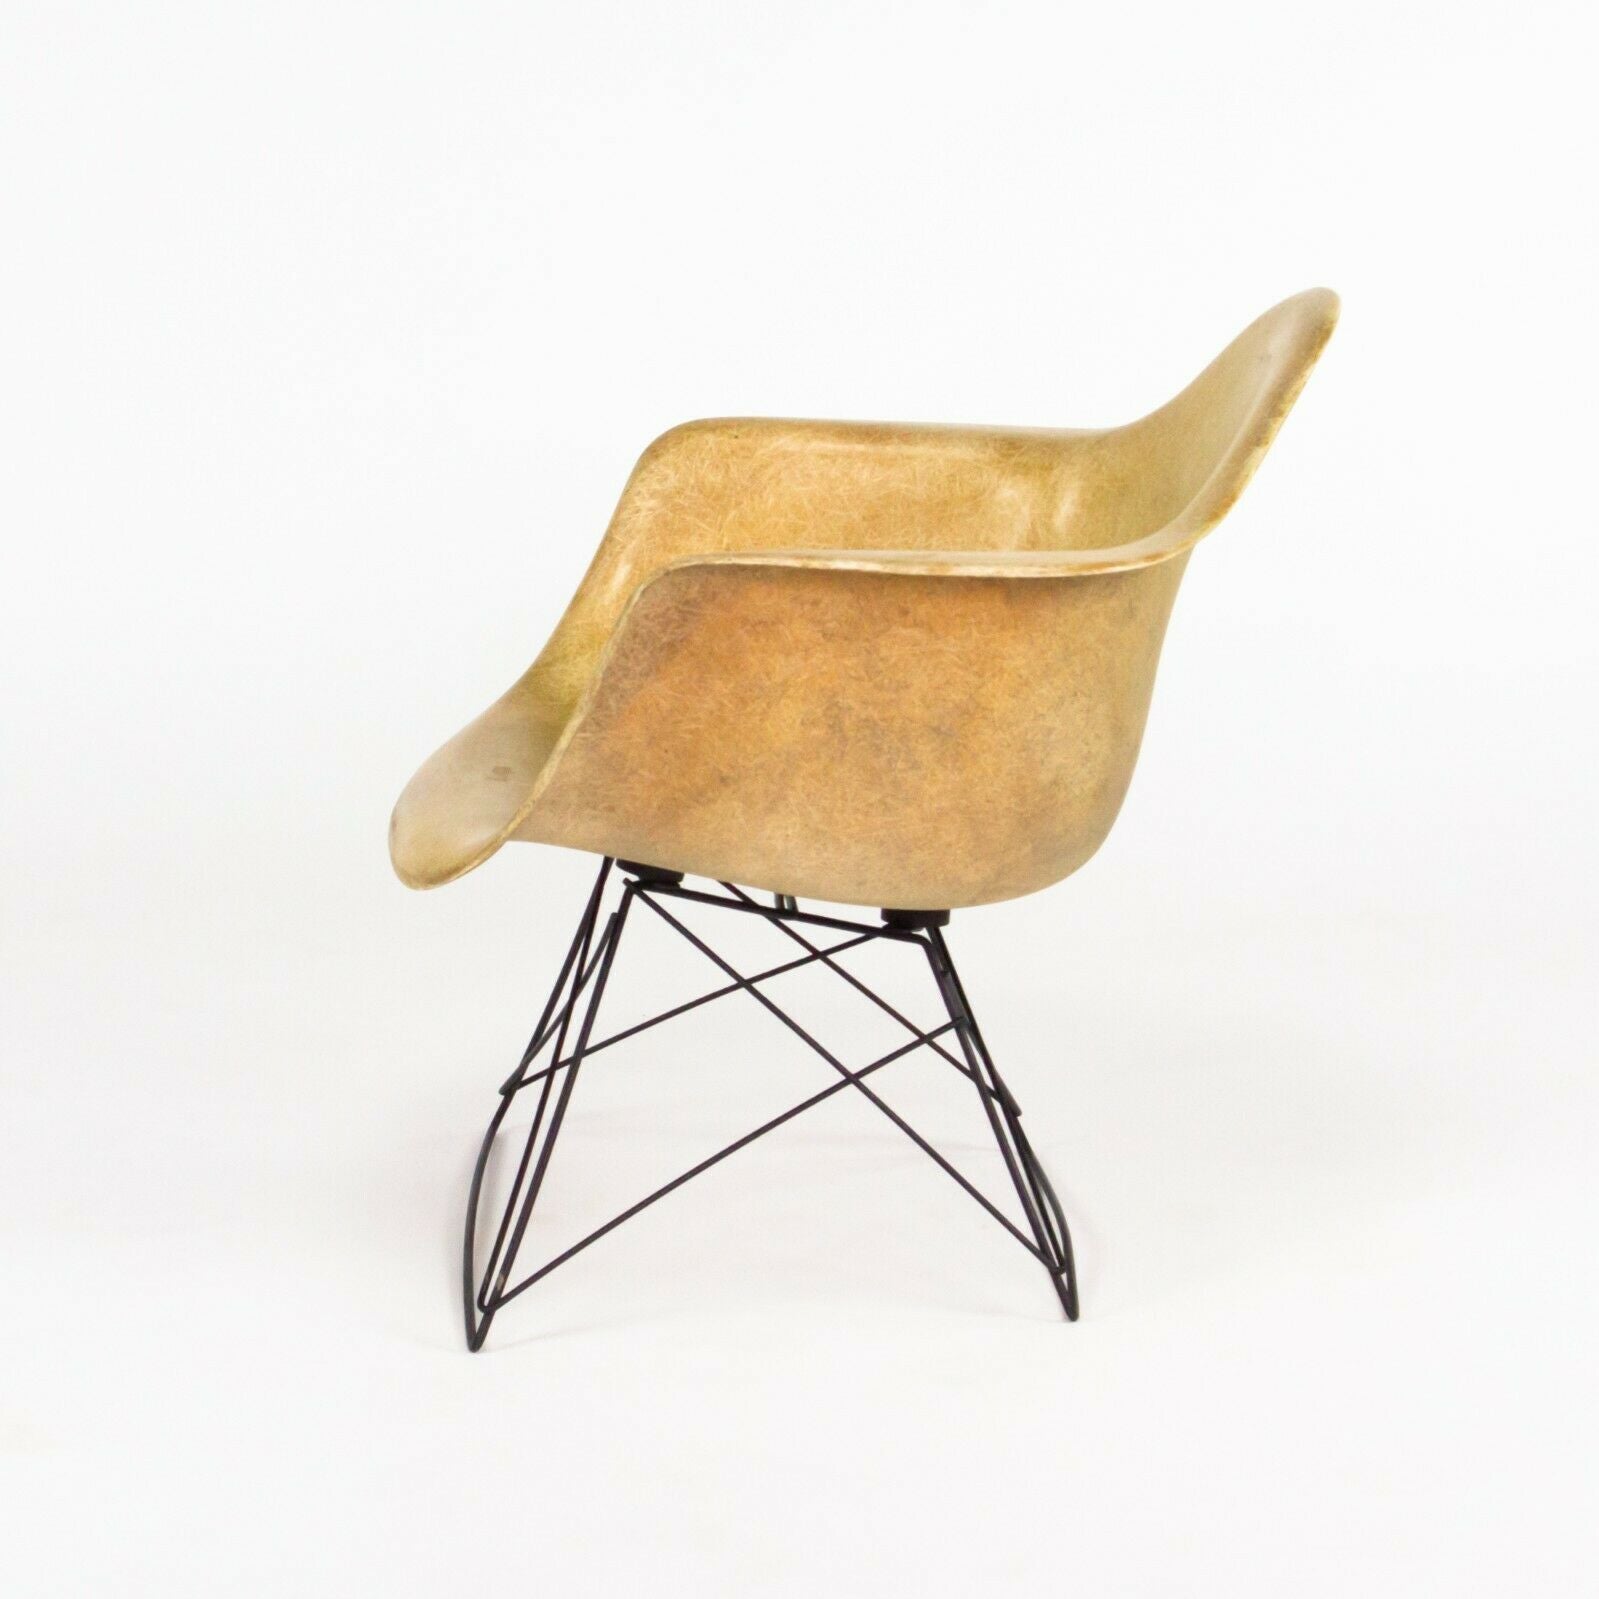 SOLD 1954 Herman Miller Eames Fiberglass LAR Arm Shell Lounge Chair Cats Cradle Base